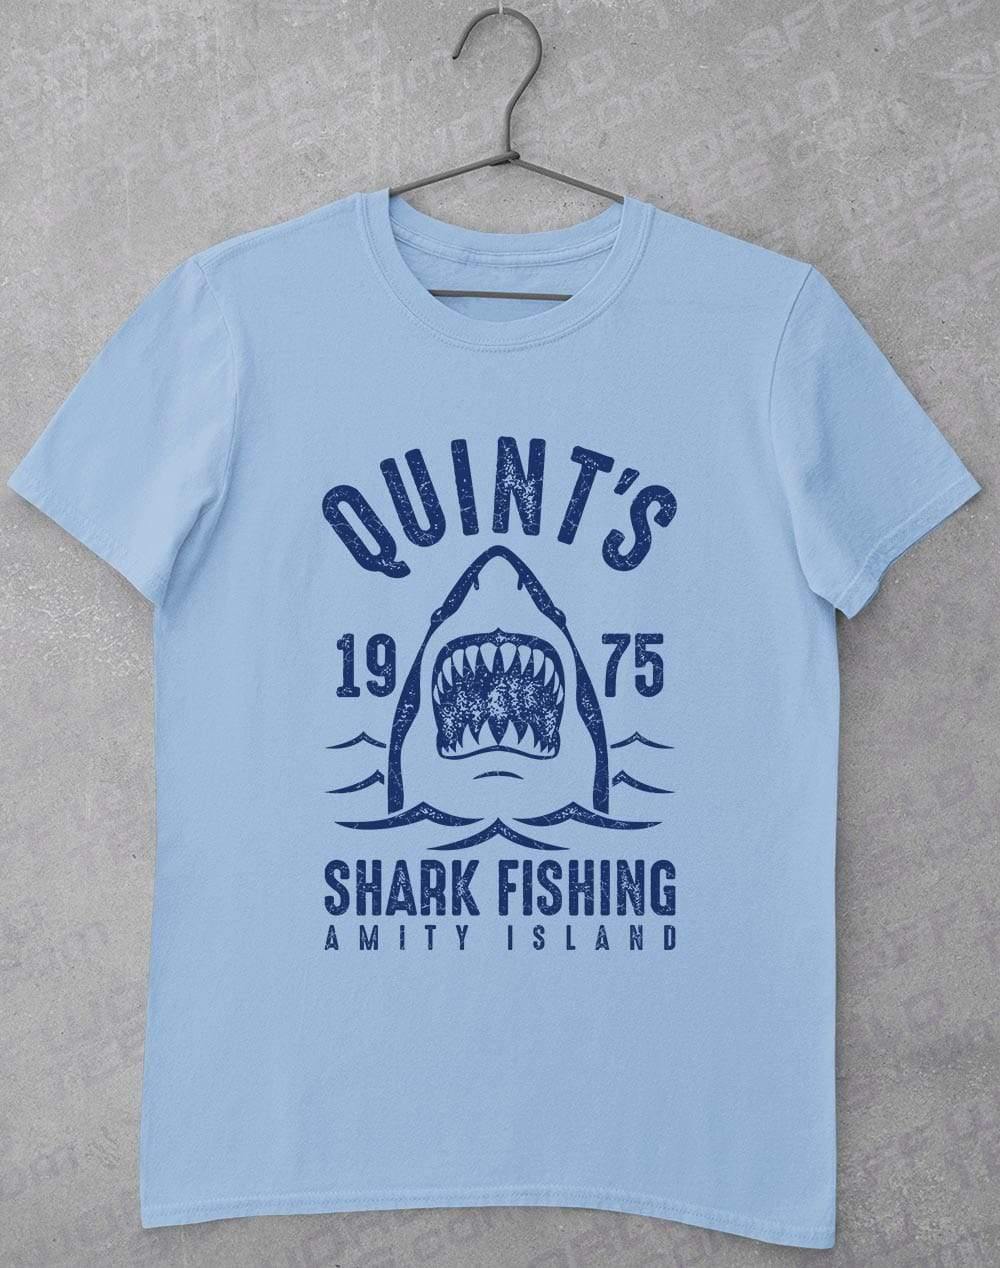 Quints Shark Fishing T-Shirt S / Light Blue  - Off World Tees